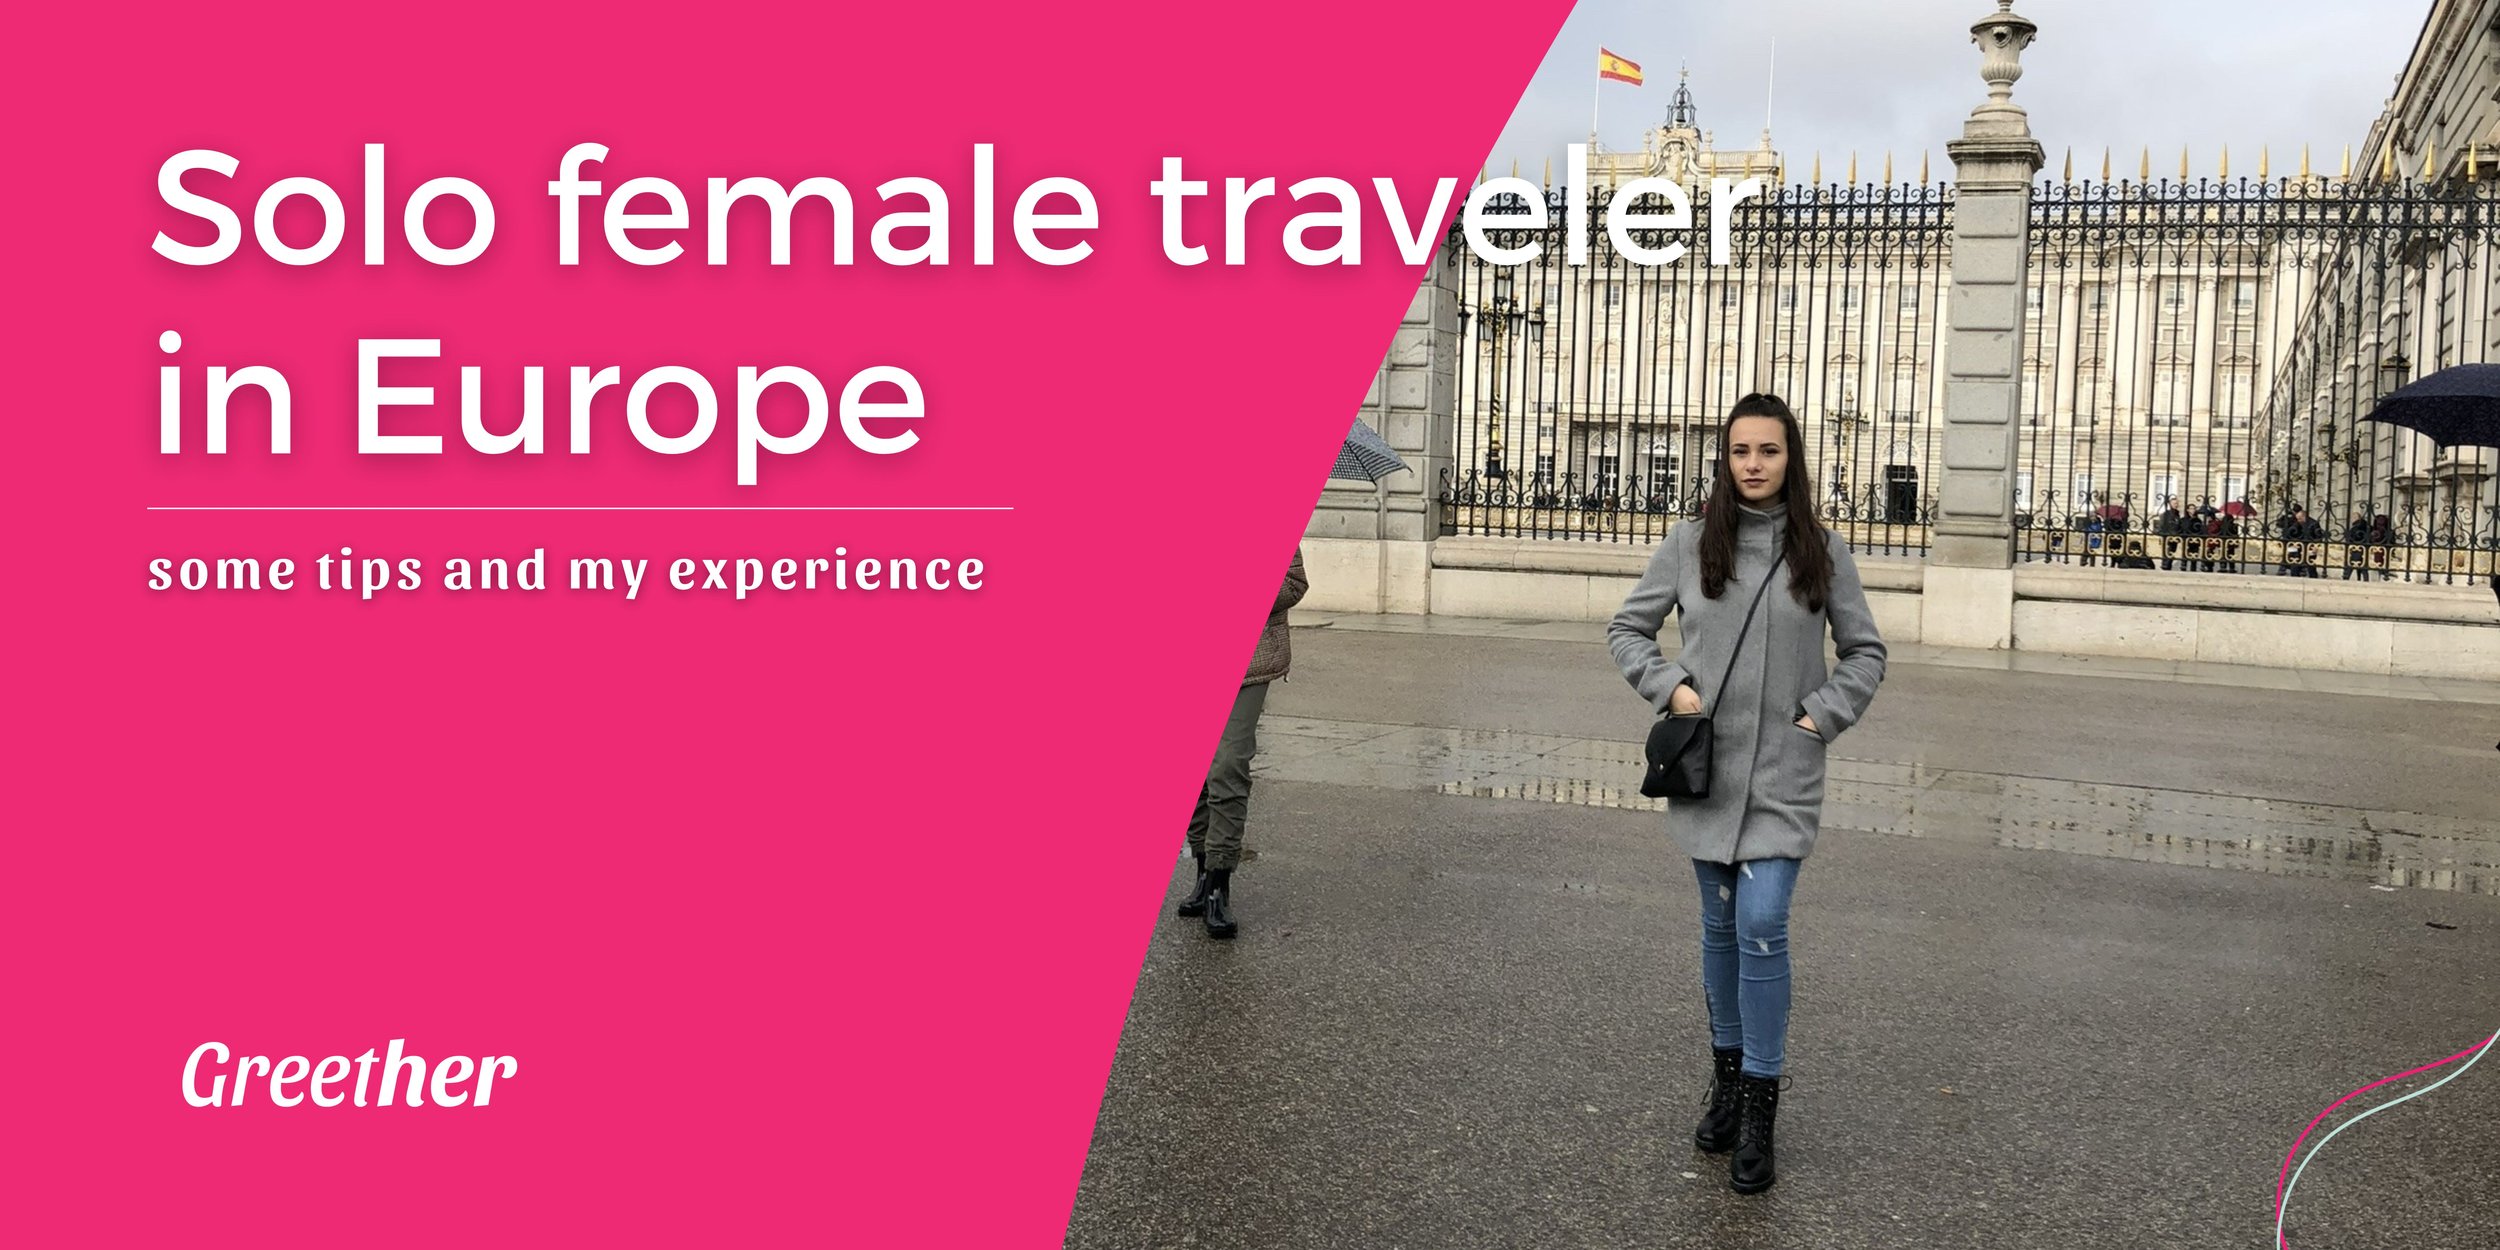 Solo female traveler in Europe